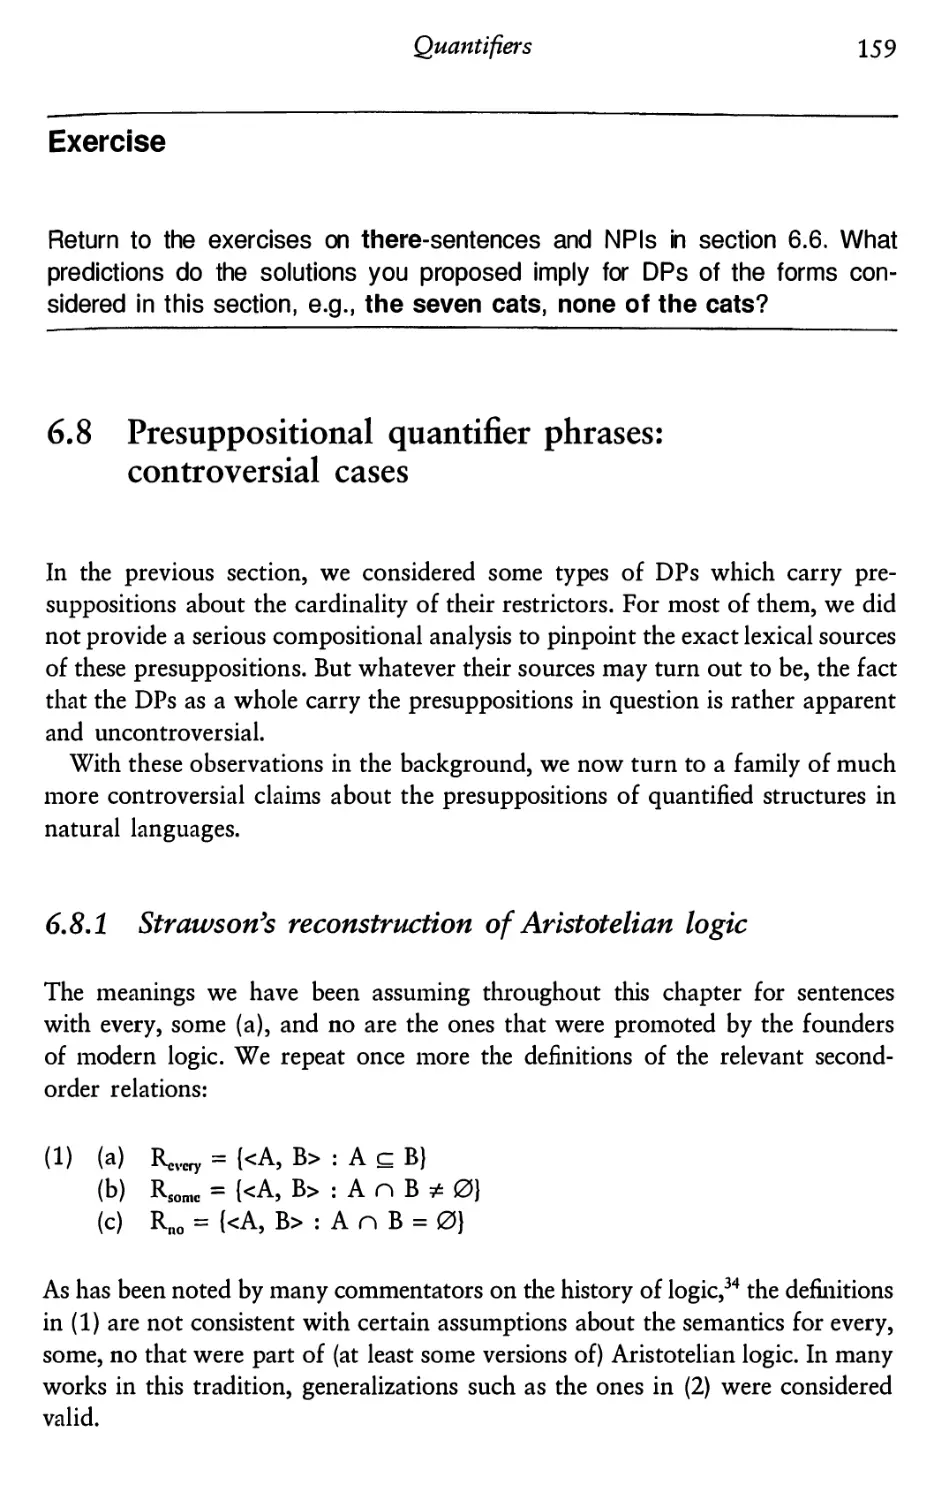 6.8 Presuppositional quantifier phrases: controversial cases